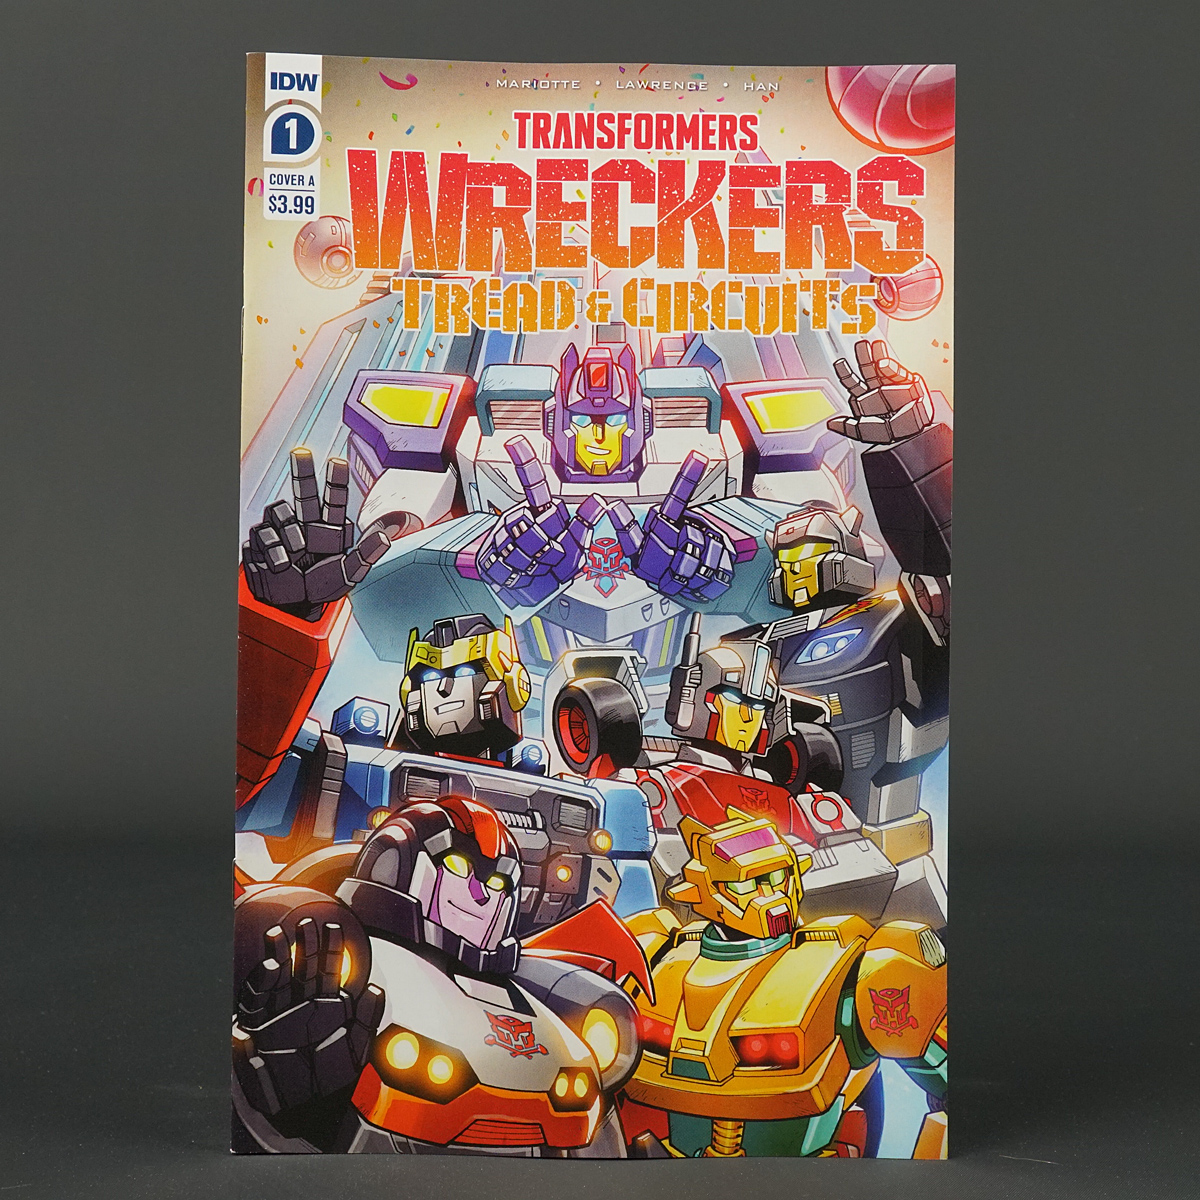 Transformers Wreckers TREAD & CIRCUITS #1 Cvr A IDW Comics 2021 AUG210537 1A